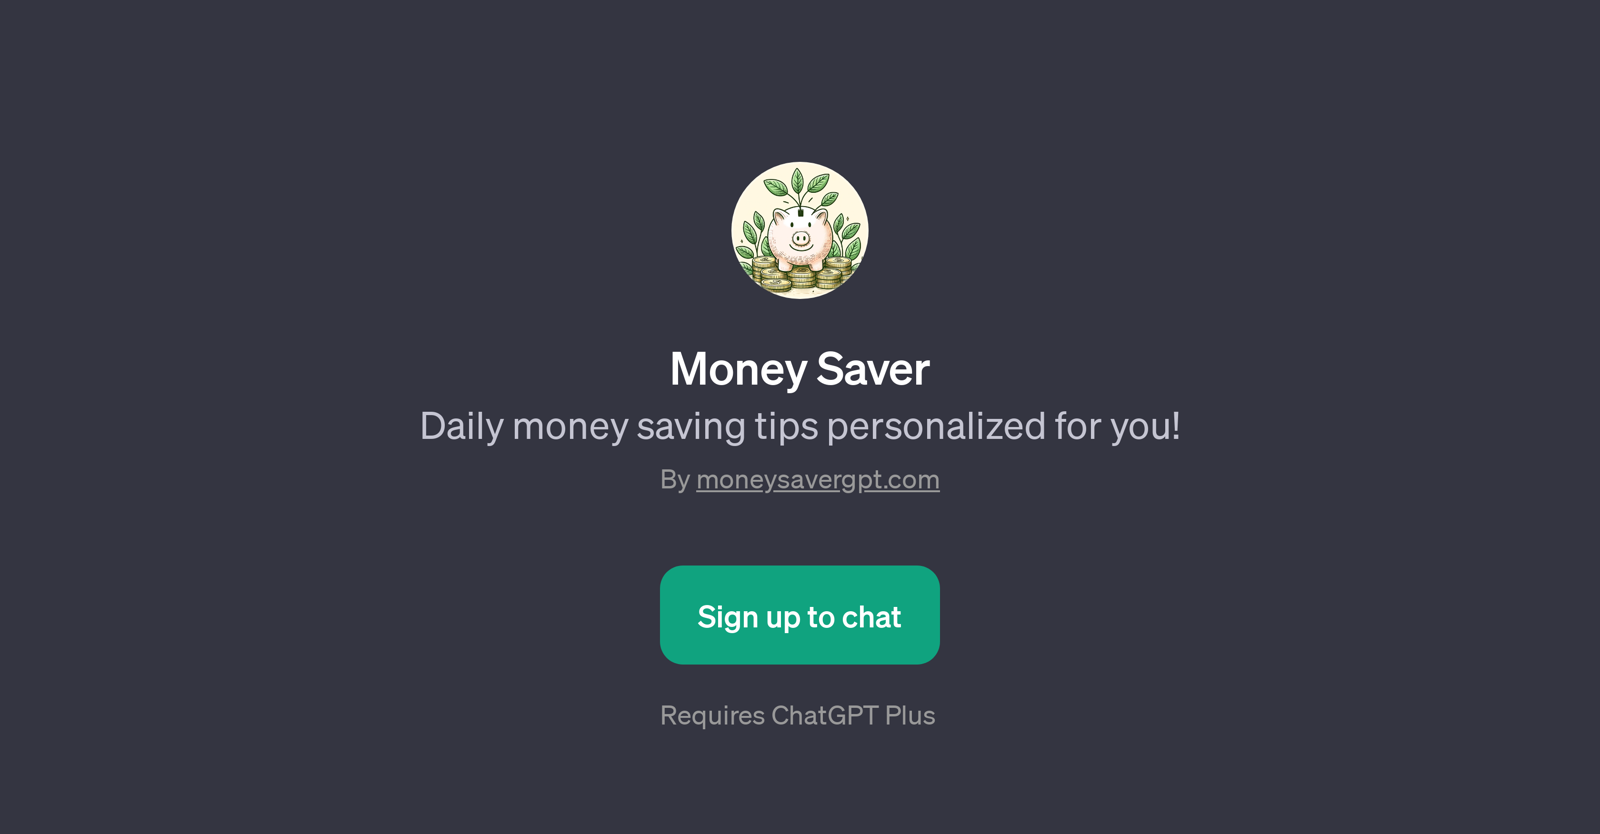 Money Saver website